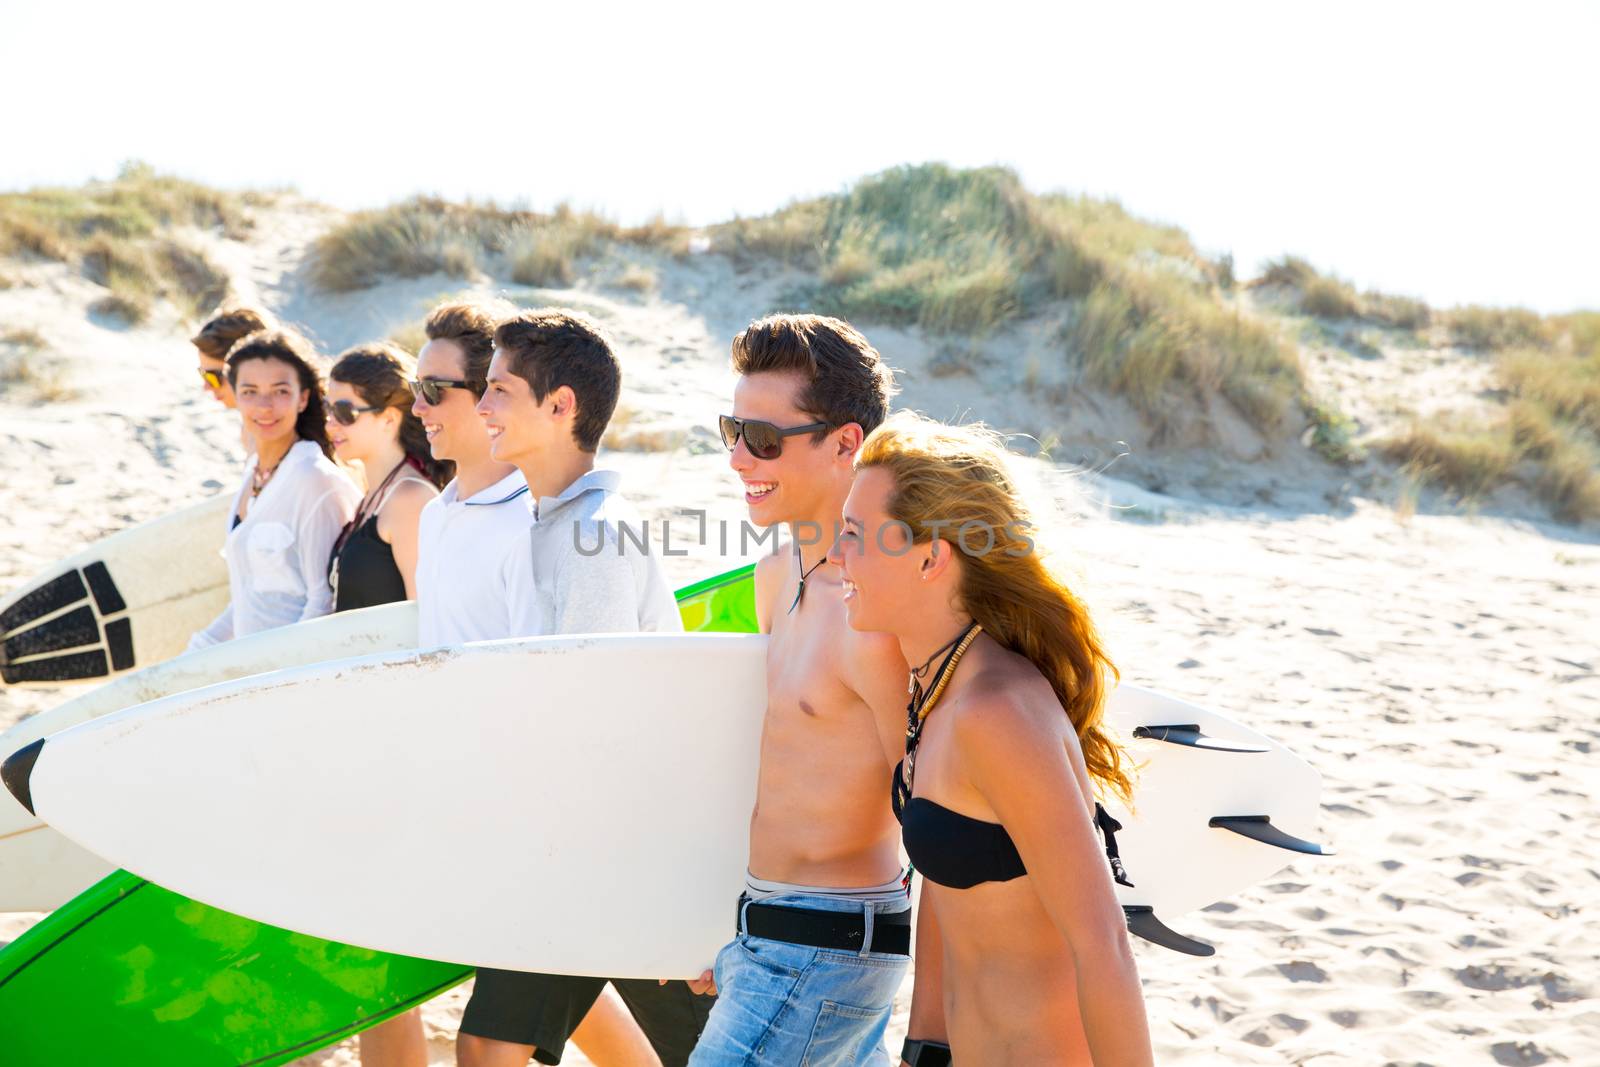 Surfer teen boys and girls group walking on beach by lunamarina